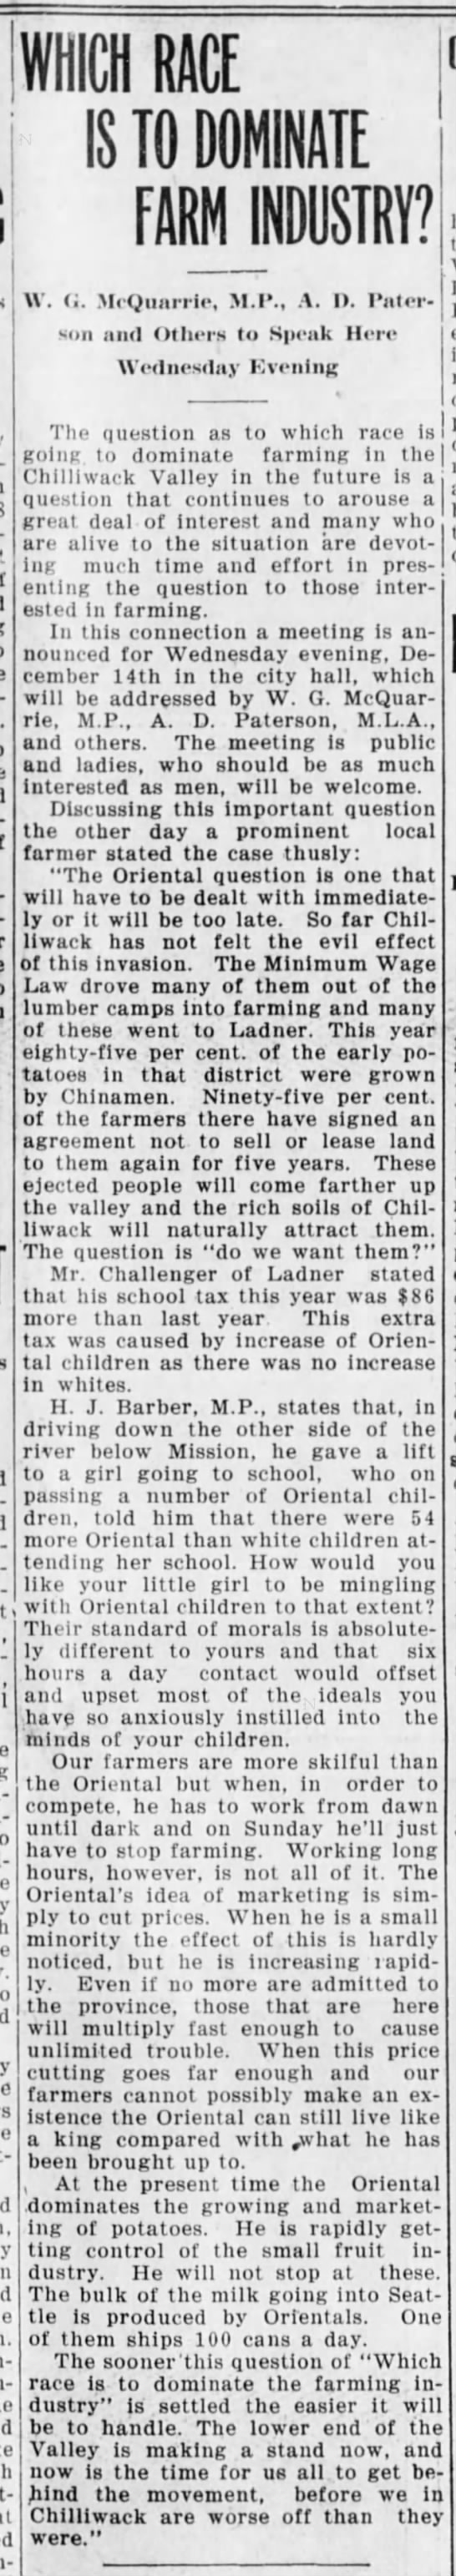 Chilliwack Progress newspaper clipping from December 8, 1927